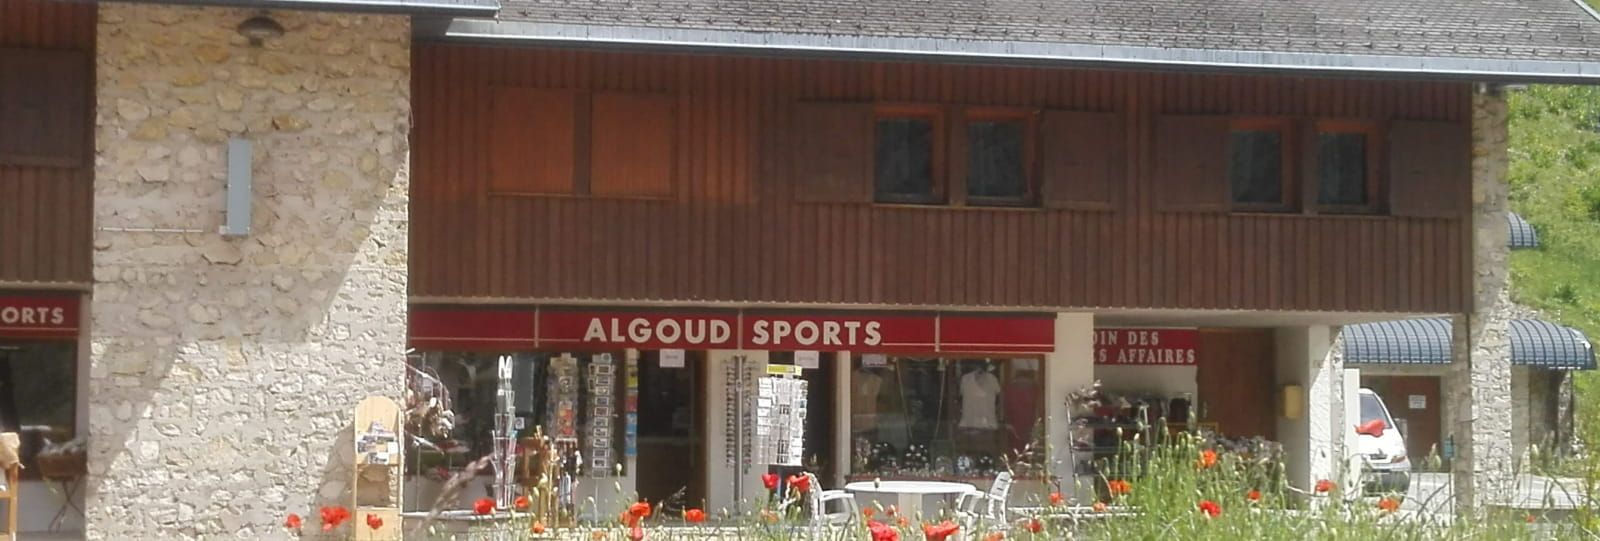 Algoud Sports